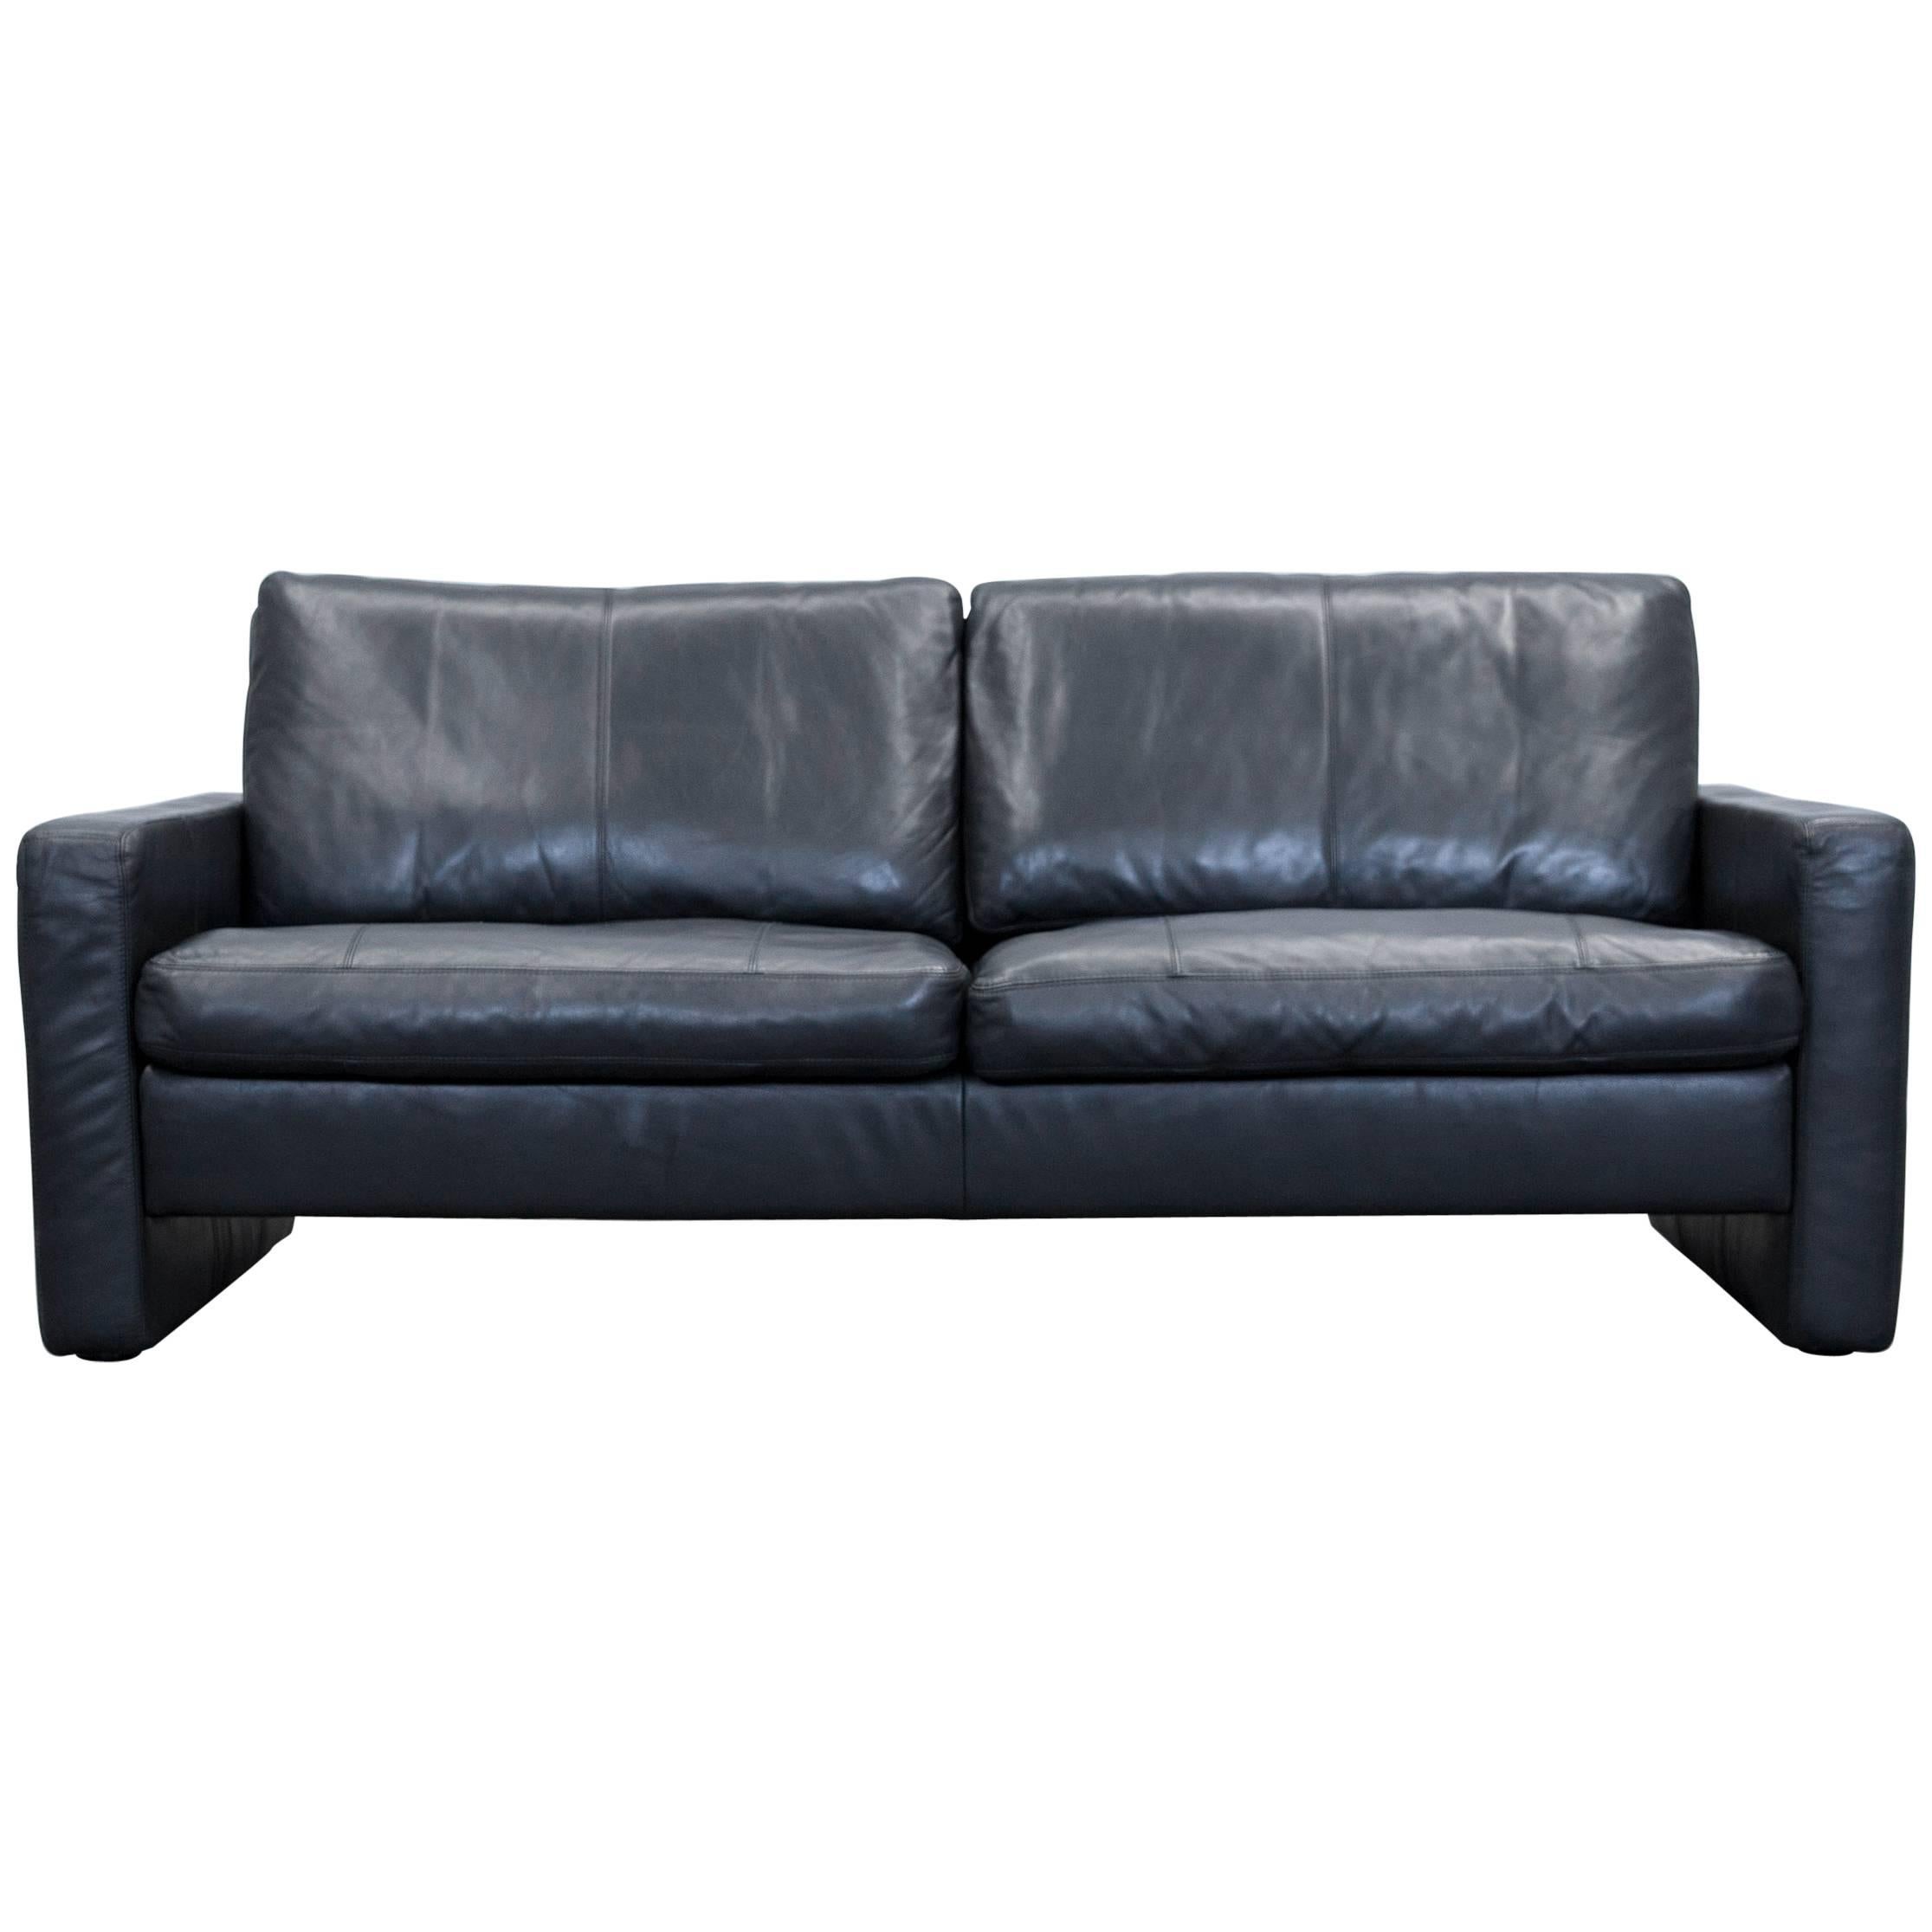 Cor Conseta Designer Sofa Leather Black Two-Seat Couch Modern